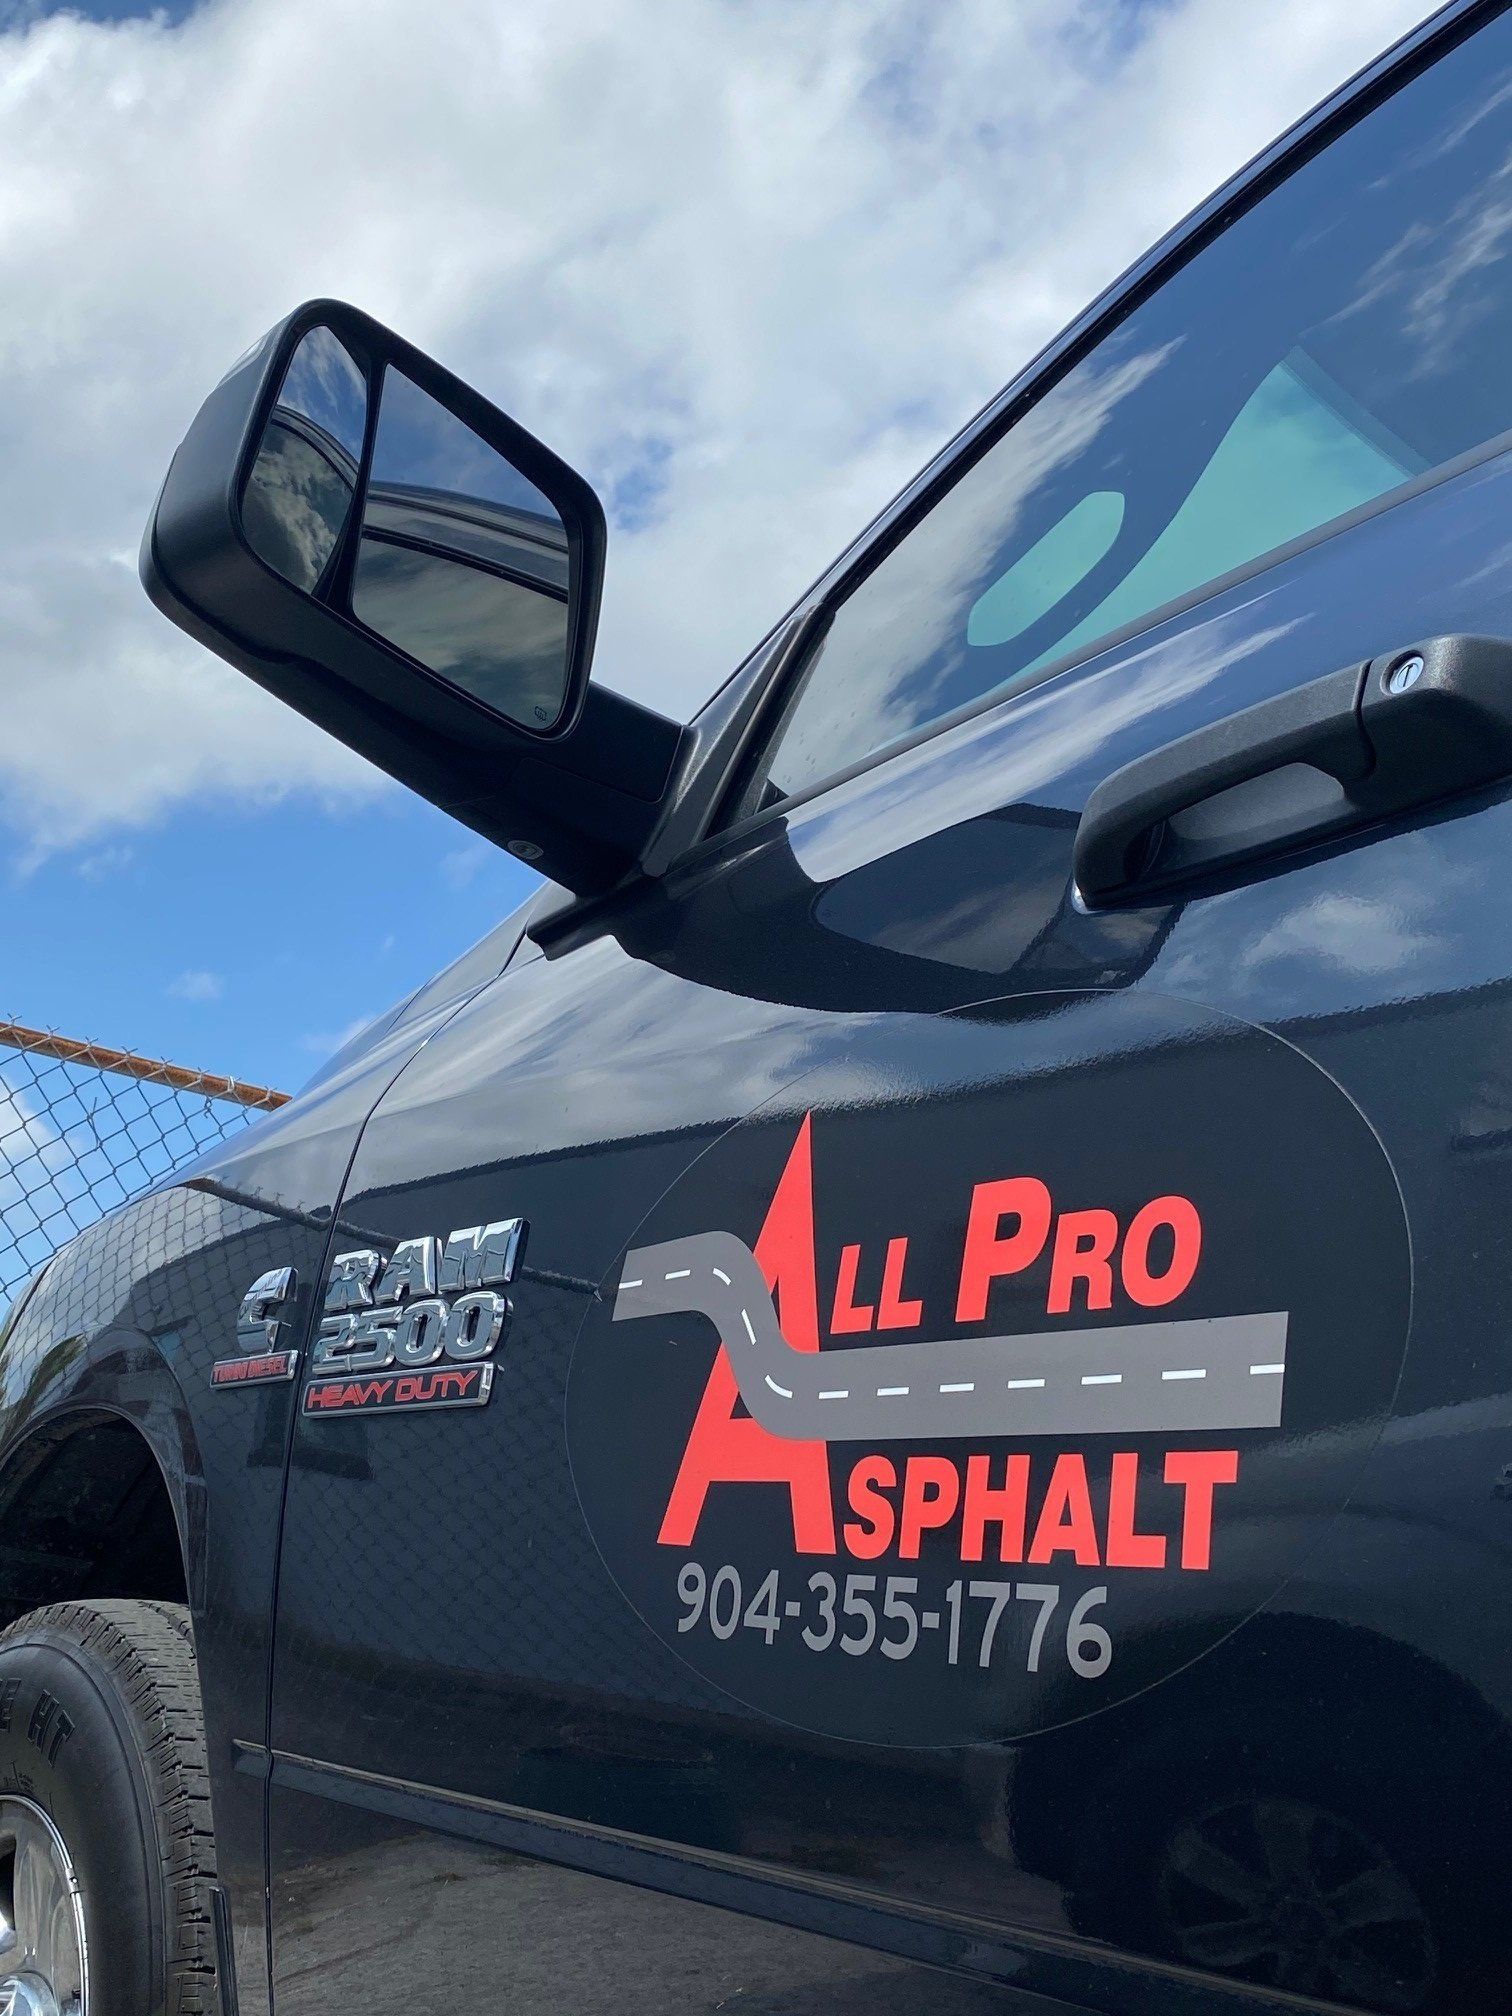 All Pro Asphalt Vehicle — Jacksonville, FL — All Pro Asphalt